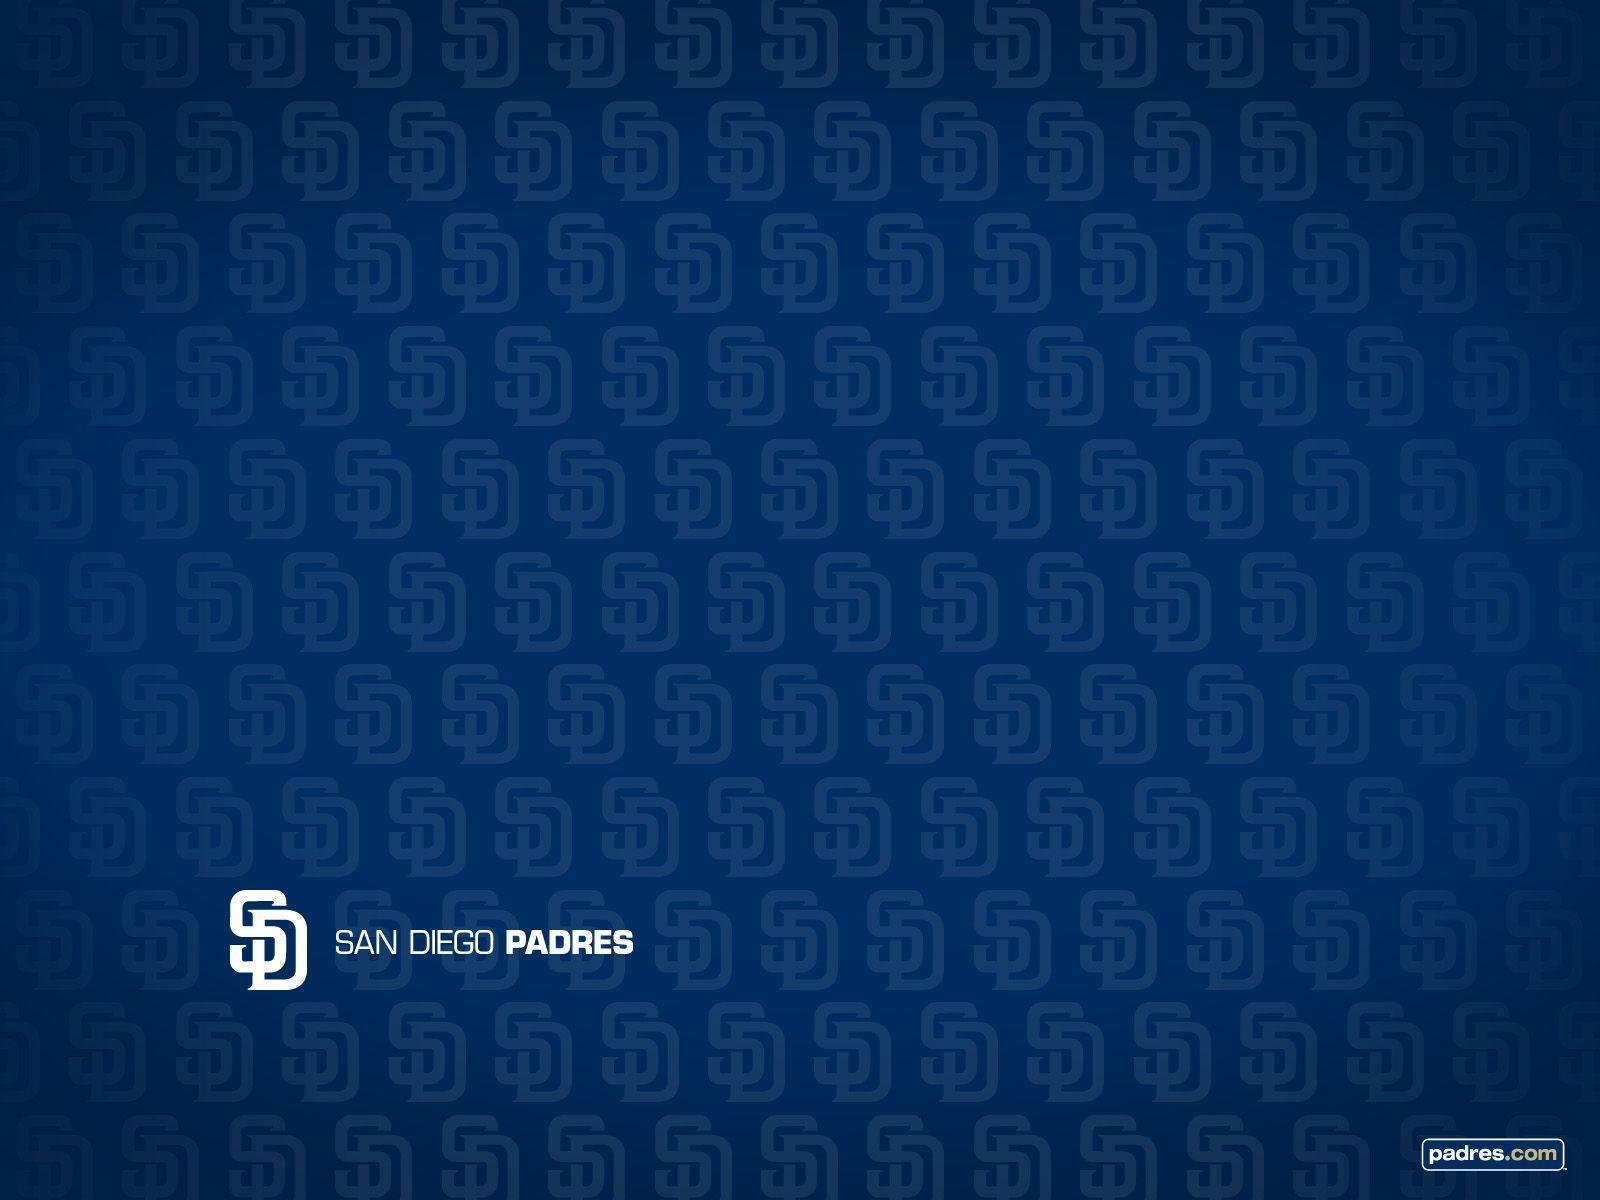 Los Angeles Dodgers wallpaper Old Logo In Blue Background taken